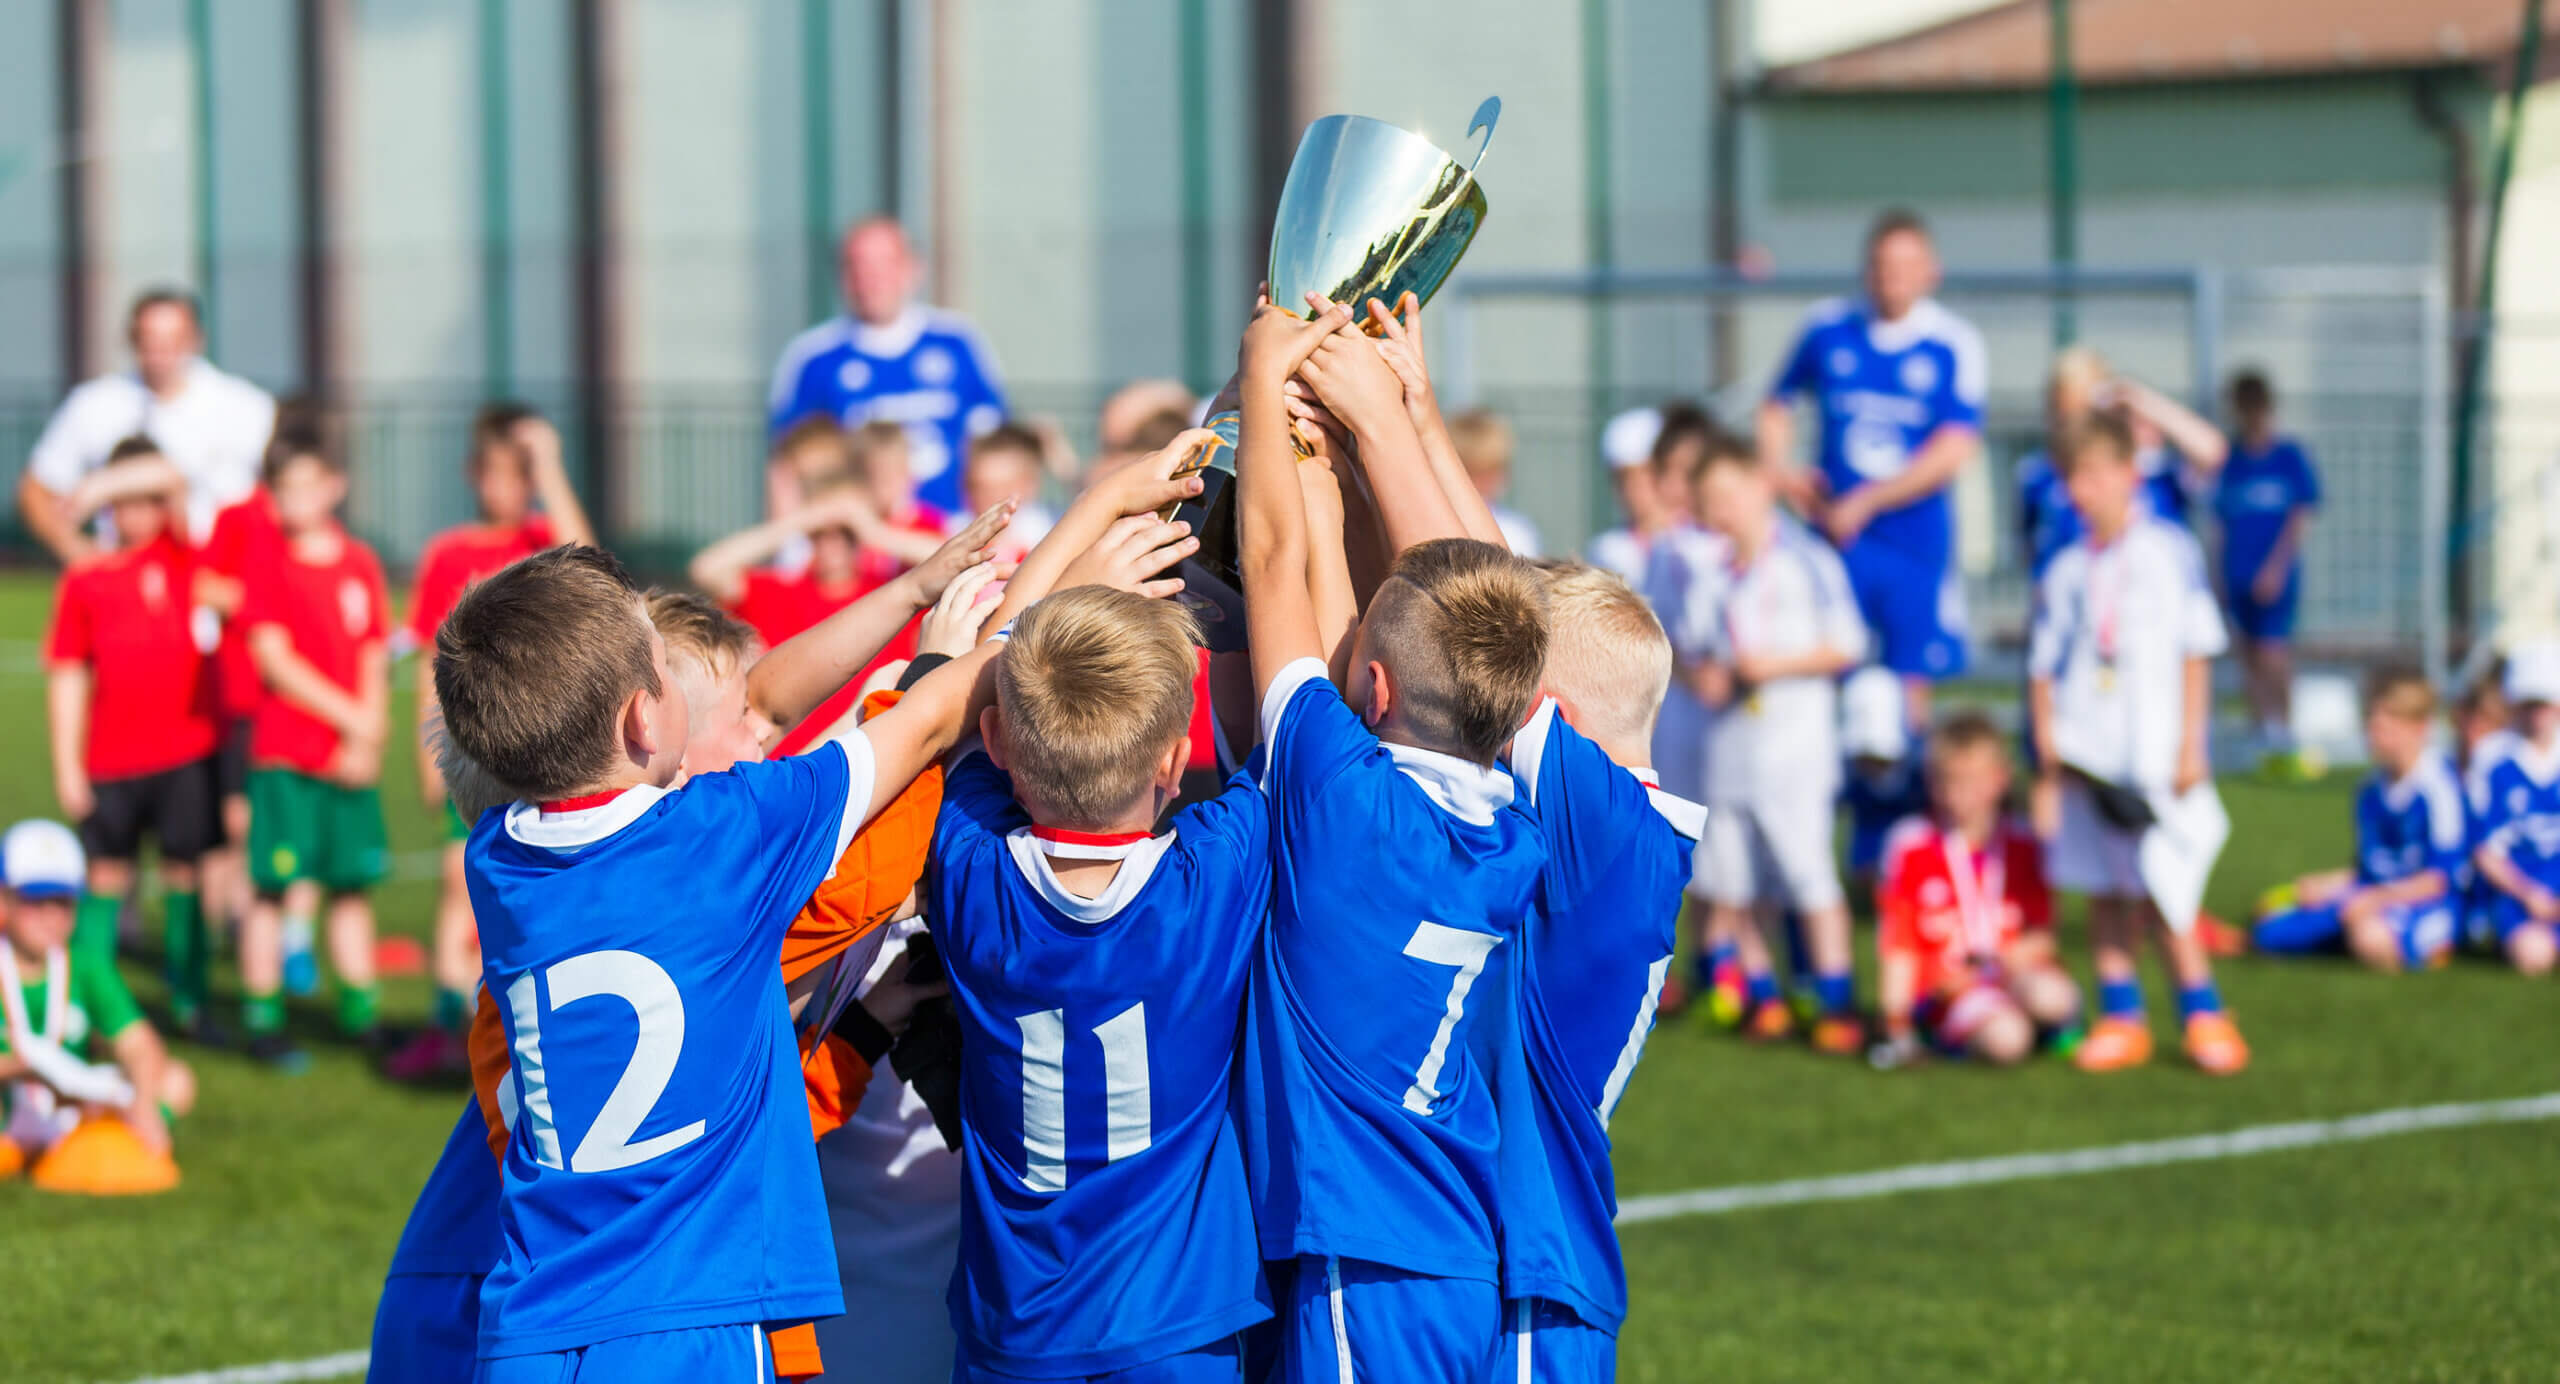 A boys' soccer team holdingu p a trophy.